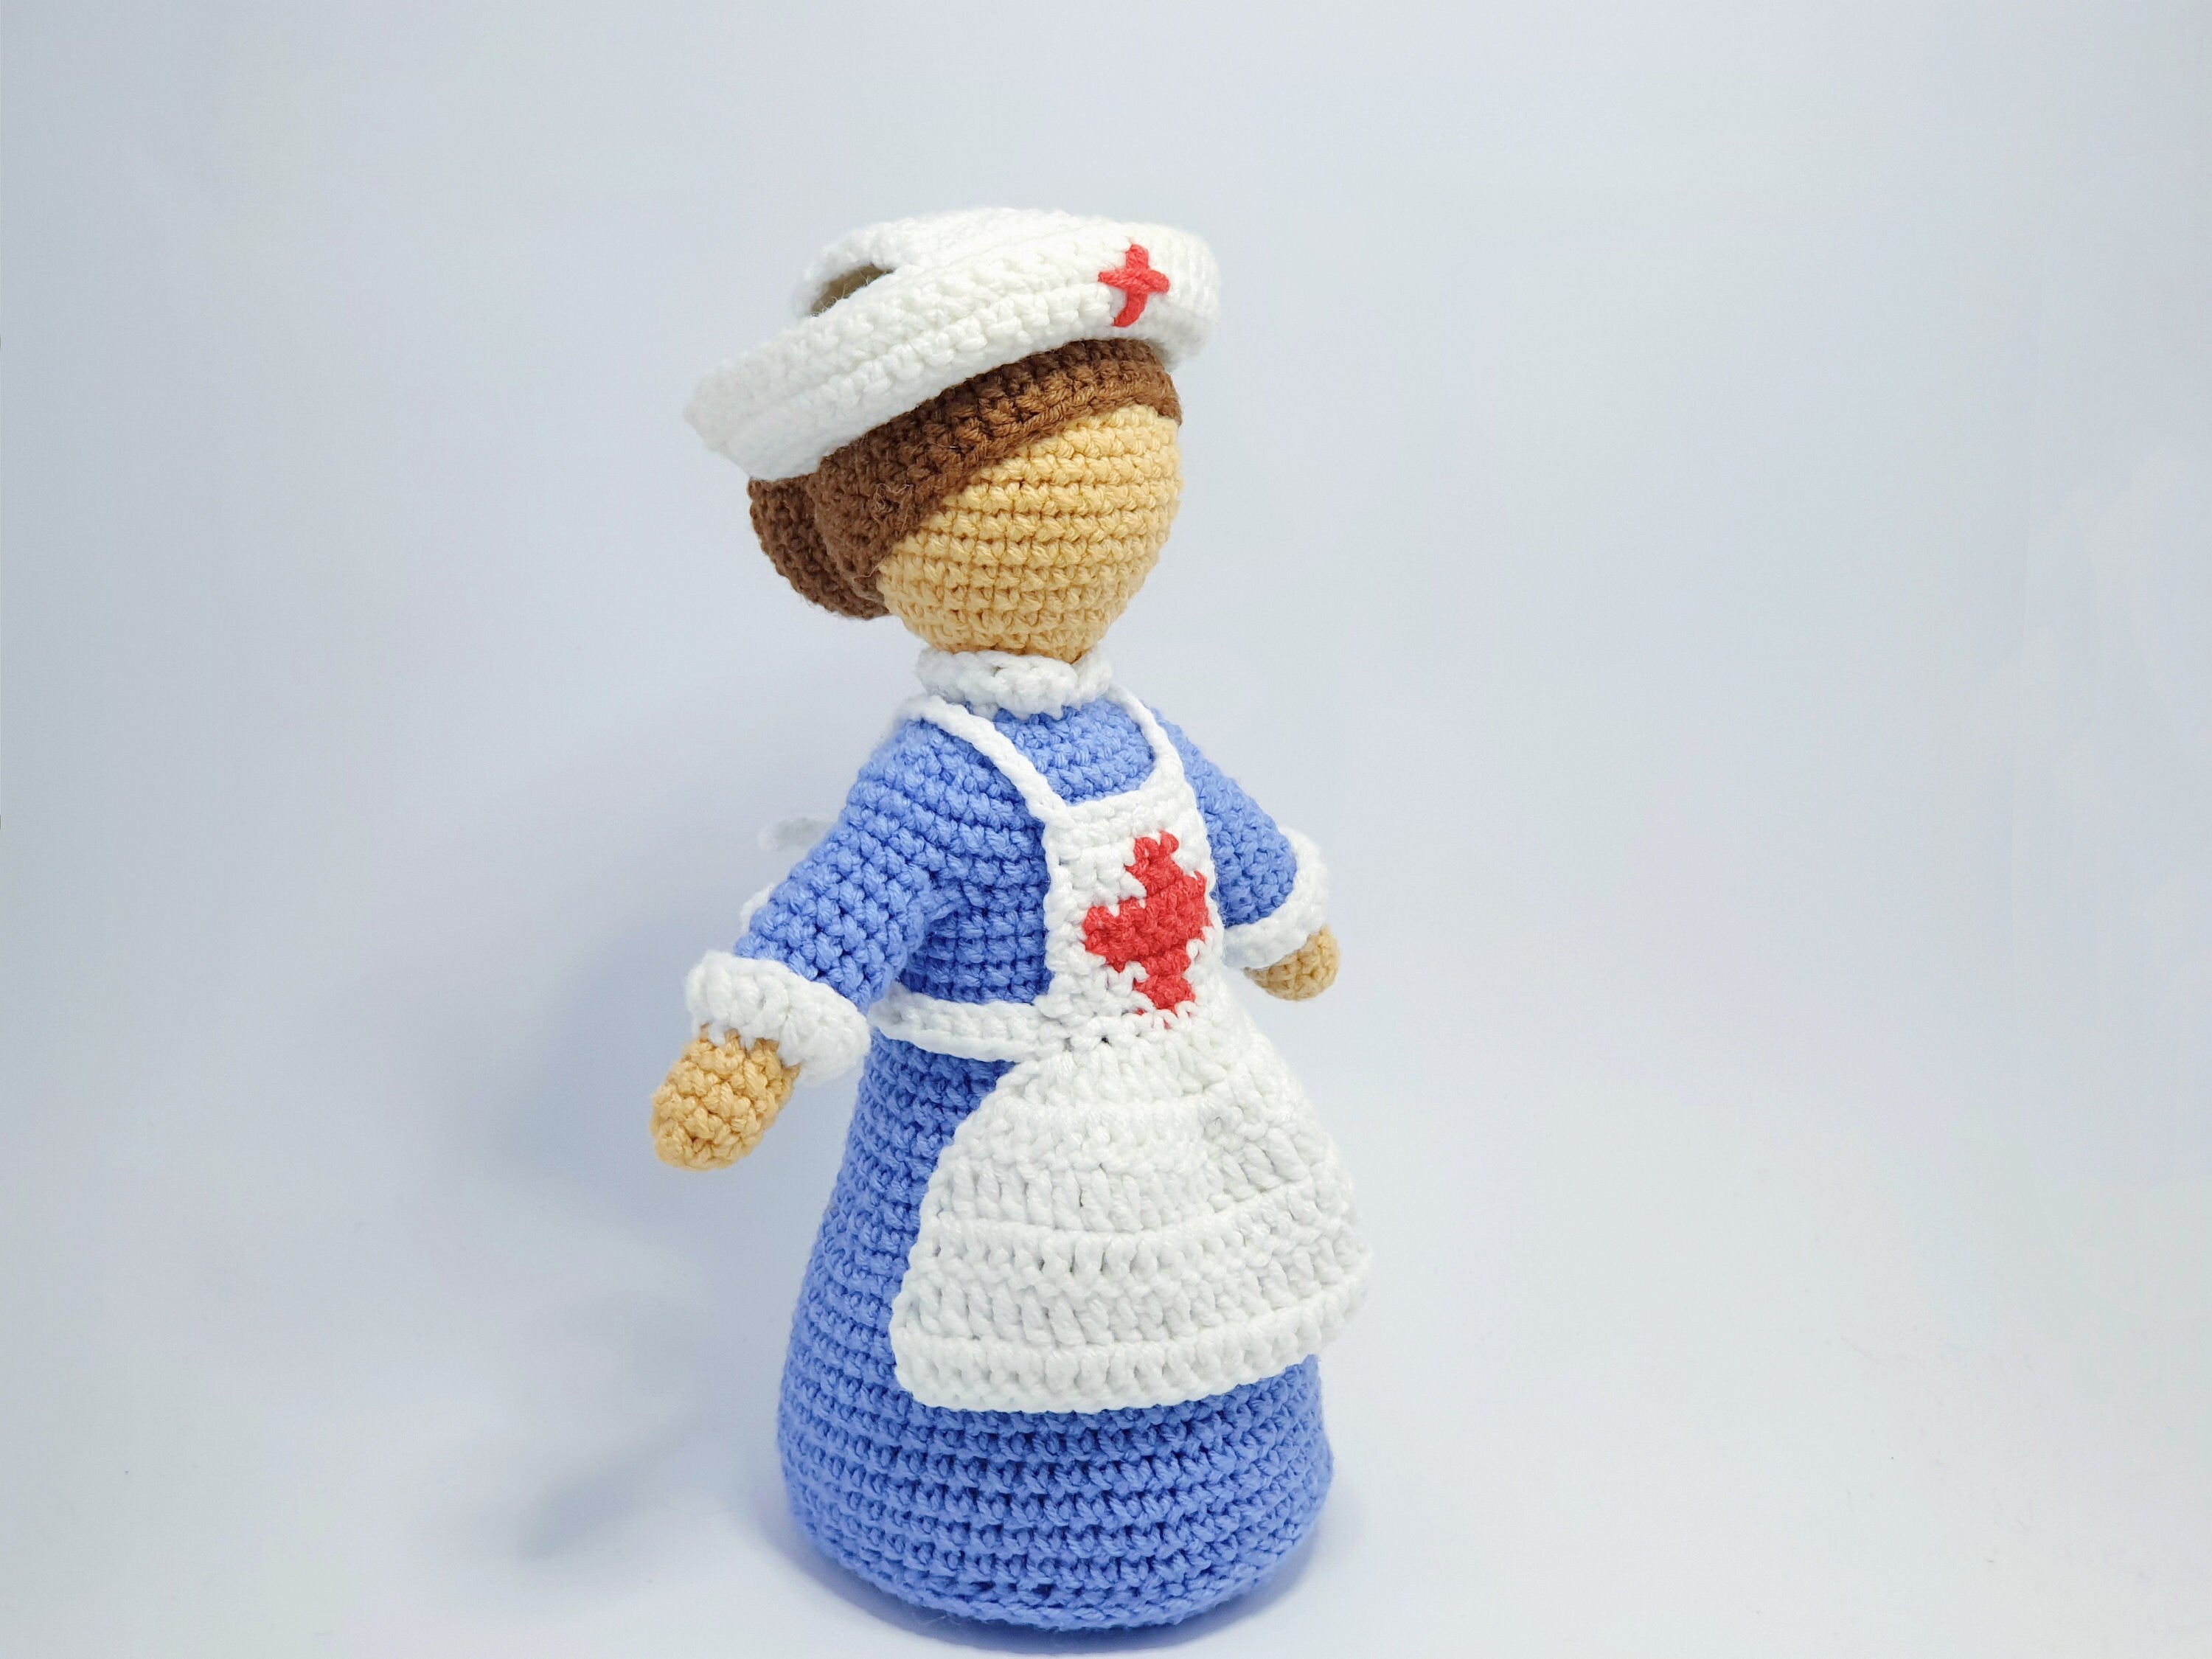 Crochet patterns amigurumi Nurse doll PDF / Instant Download tutorial